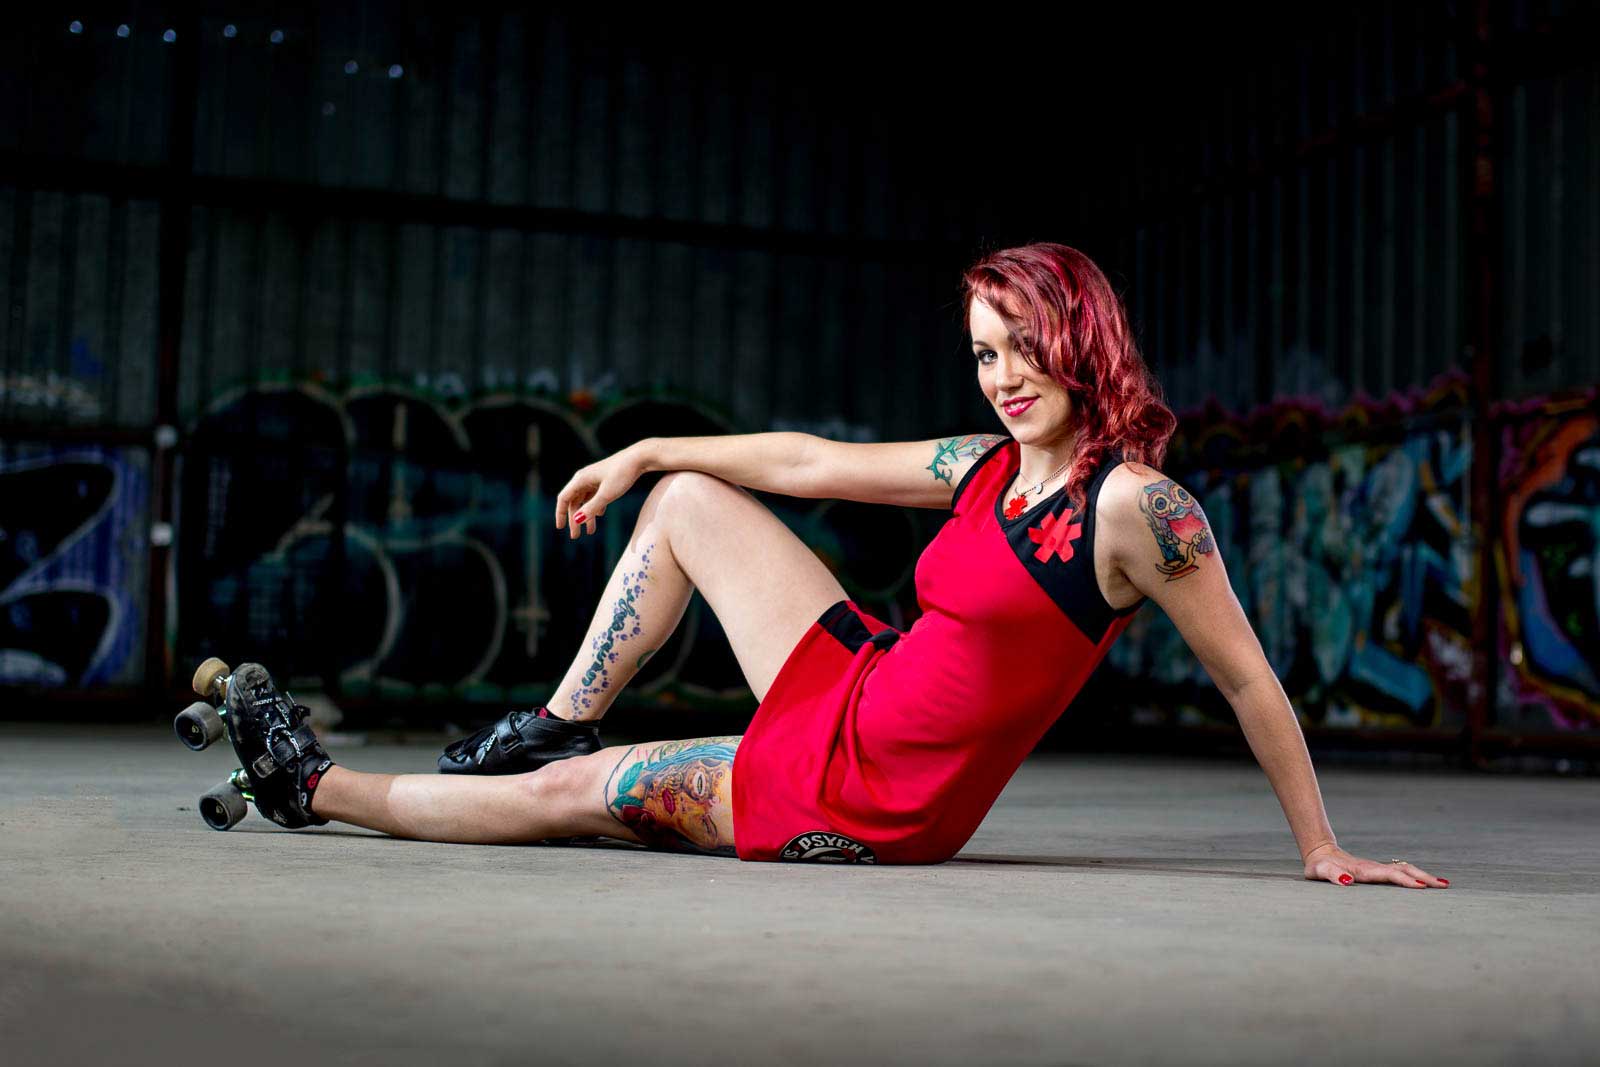 tattooed redhead roller derby posing in abandoned graffiti warehouse